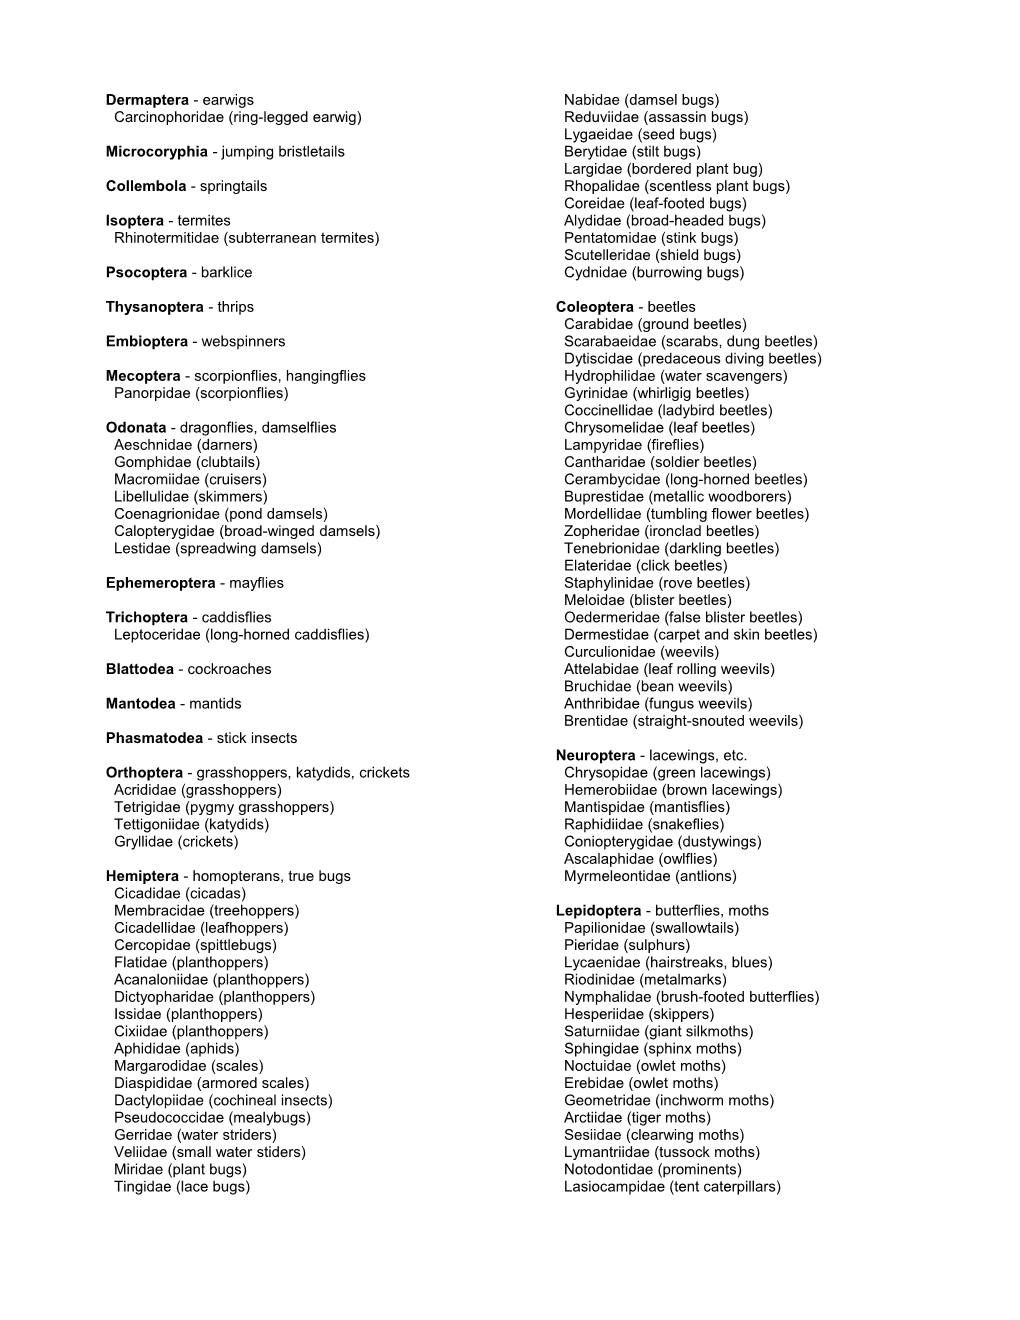 List of Arthropod Families